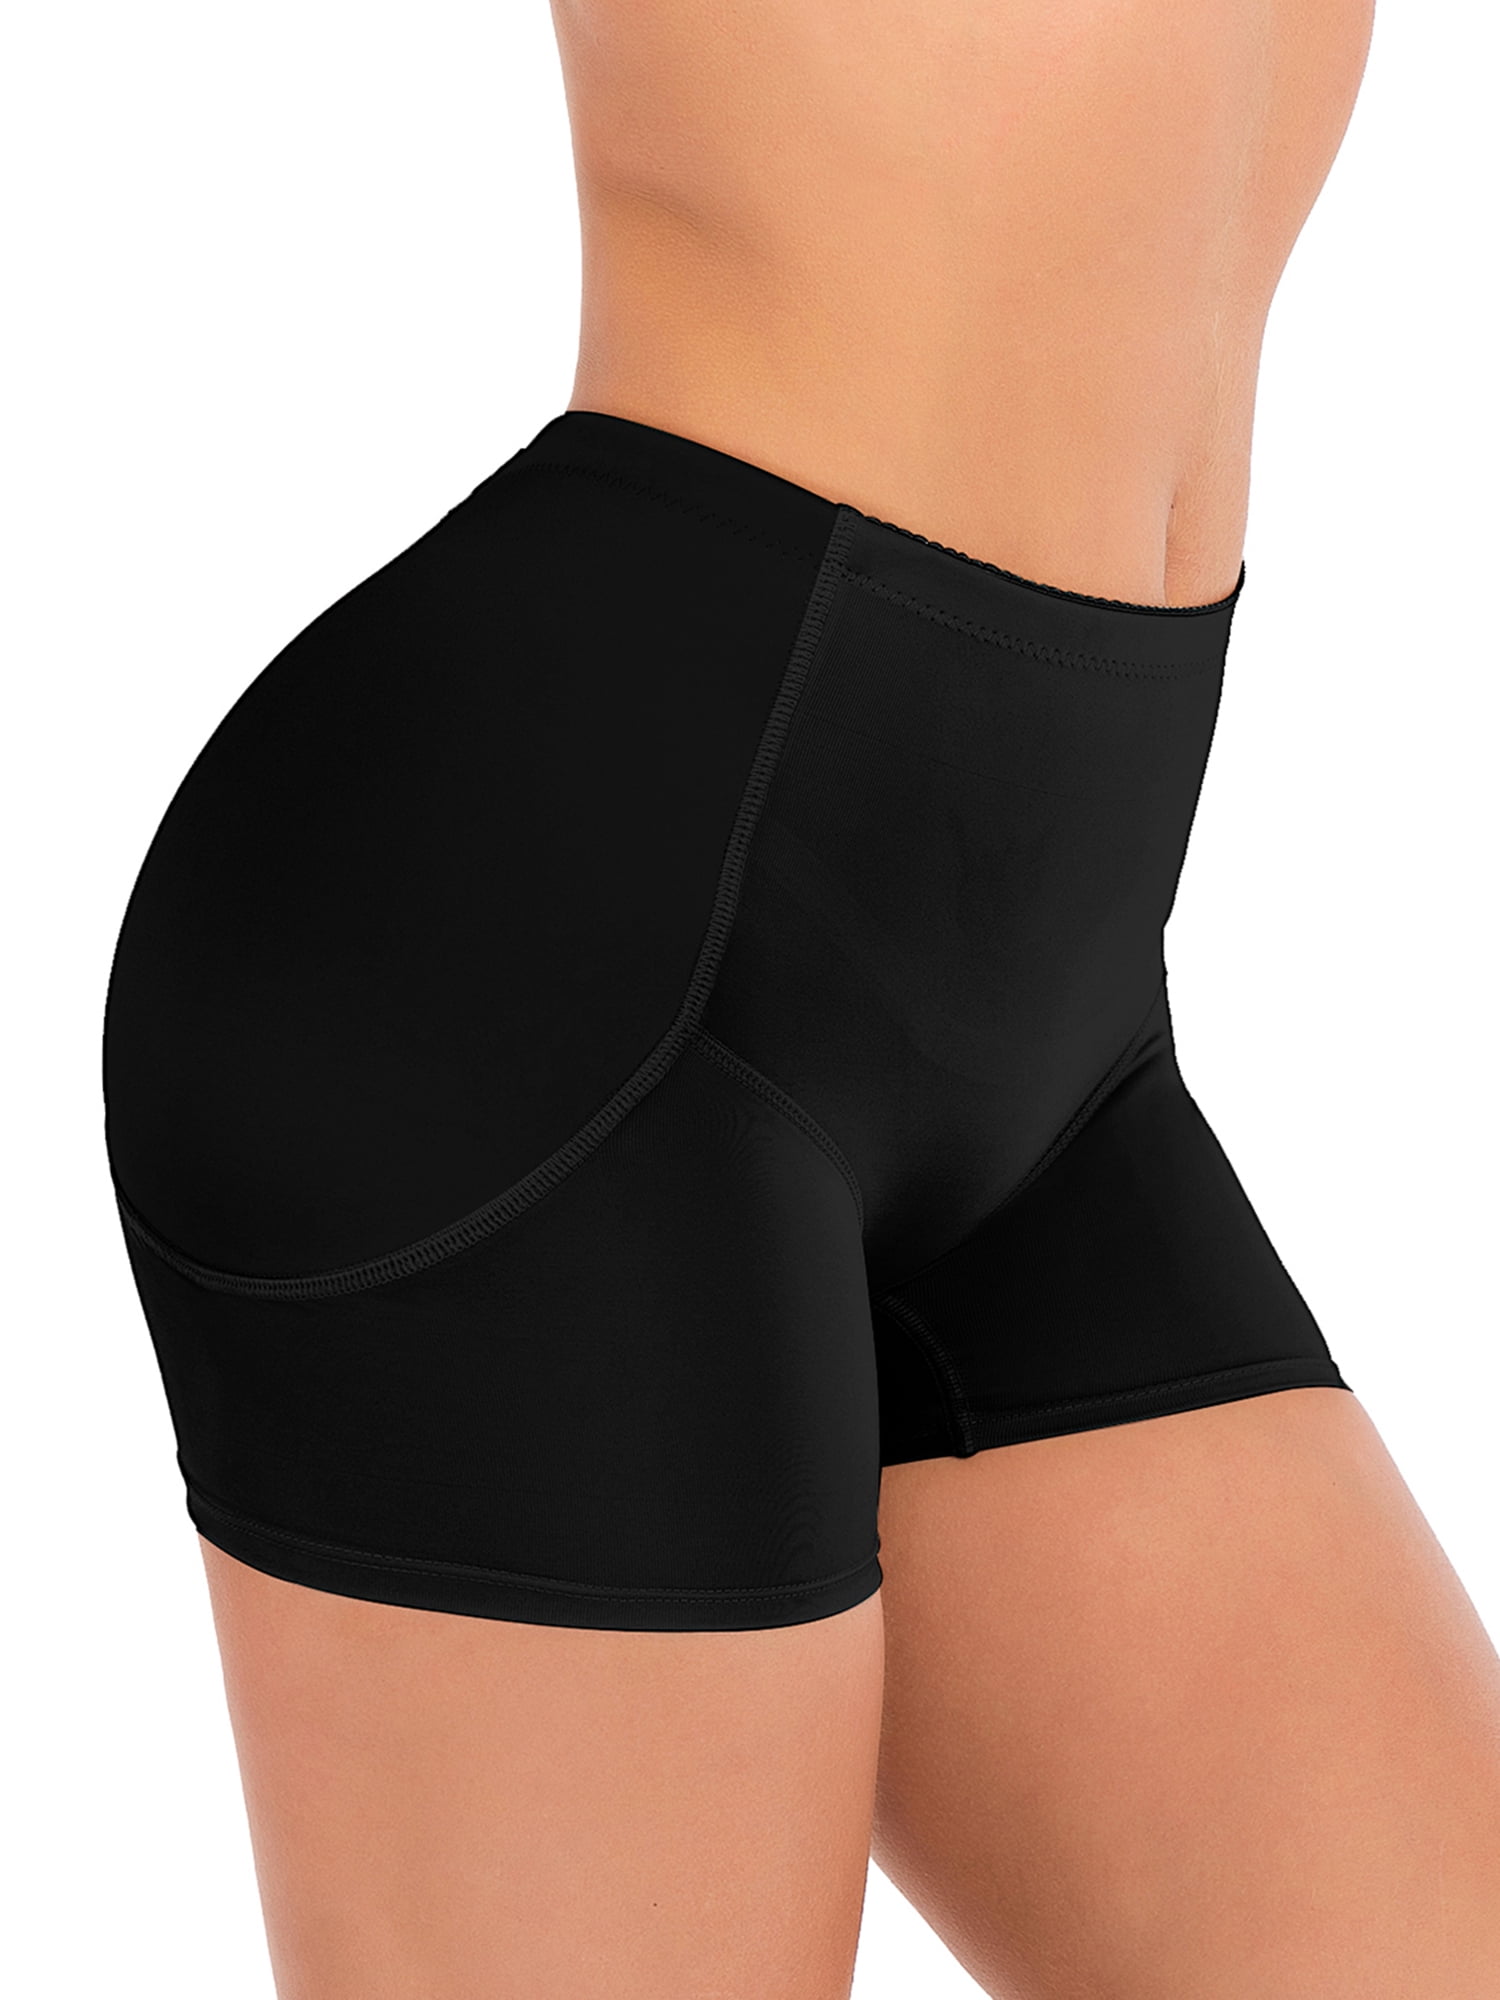 YouLoveIt Women Butt Lifter Control Panties Body Shaper Brief Hip Enhancer  Panties Plus Size Hollow Out Shapewear Thong Shapewear Cincher Brief  Enhancer Body Shaping 